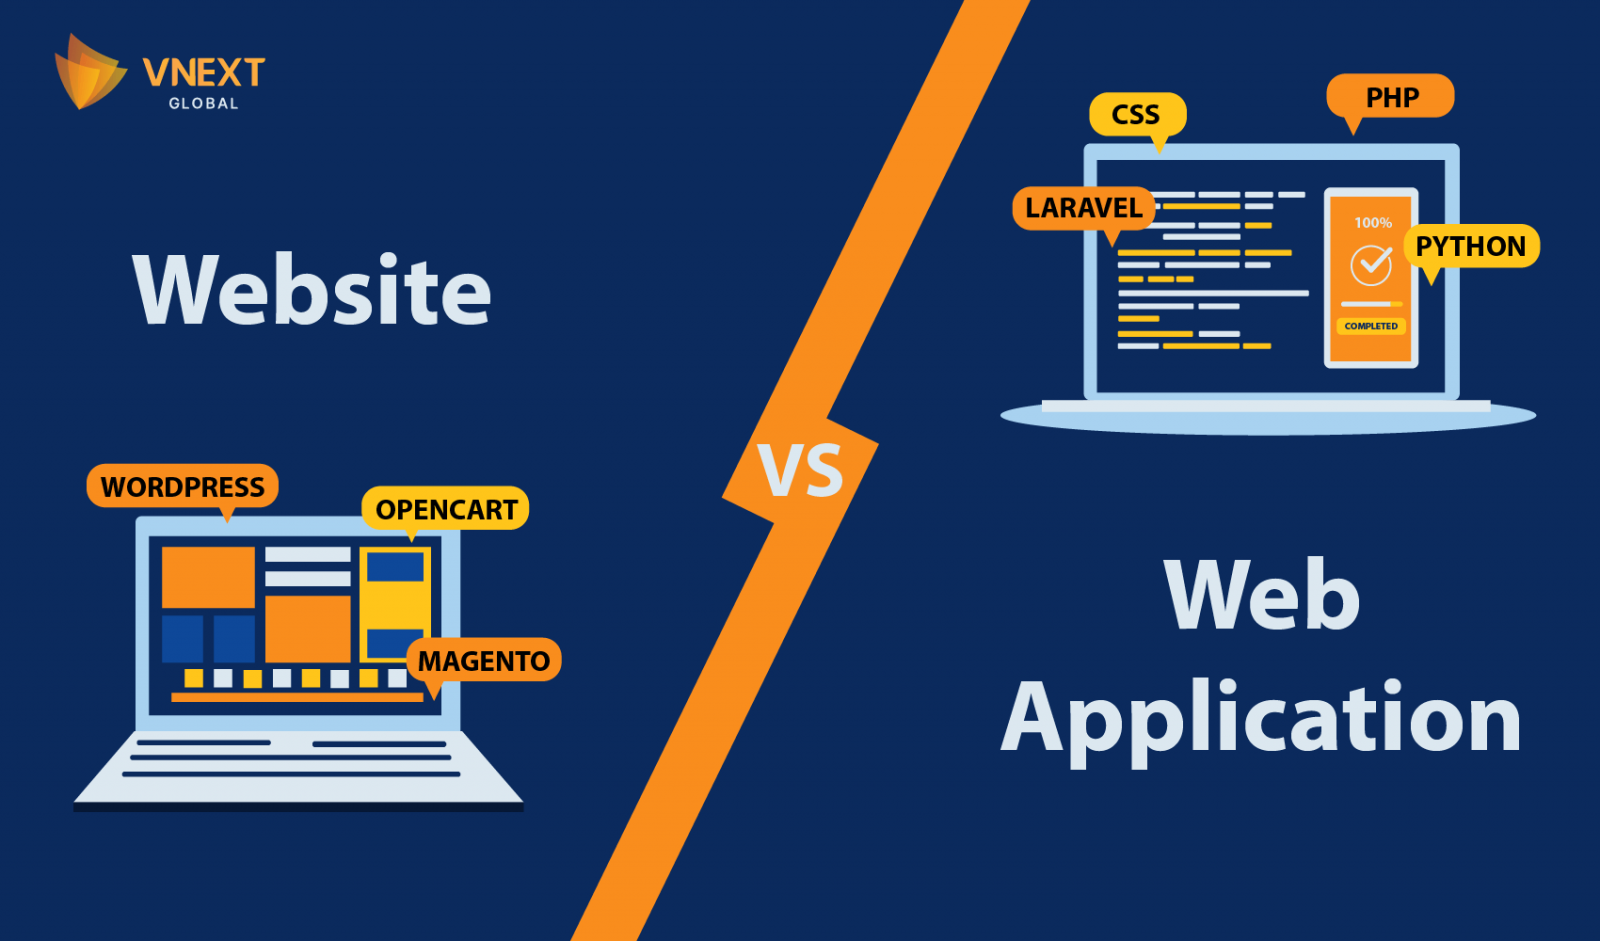 vnext global website vs web app comparison